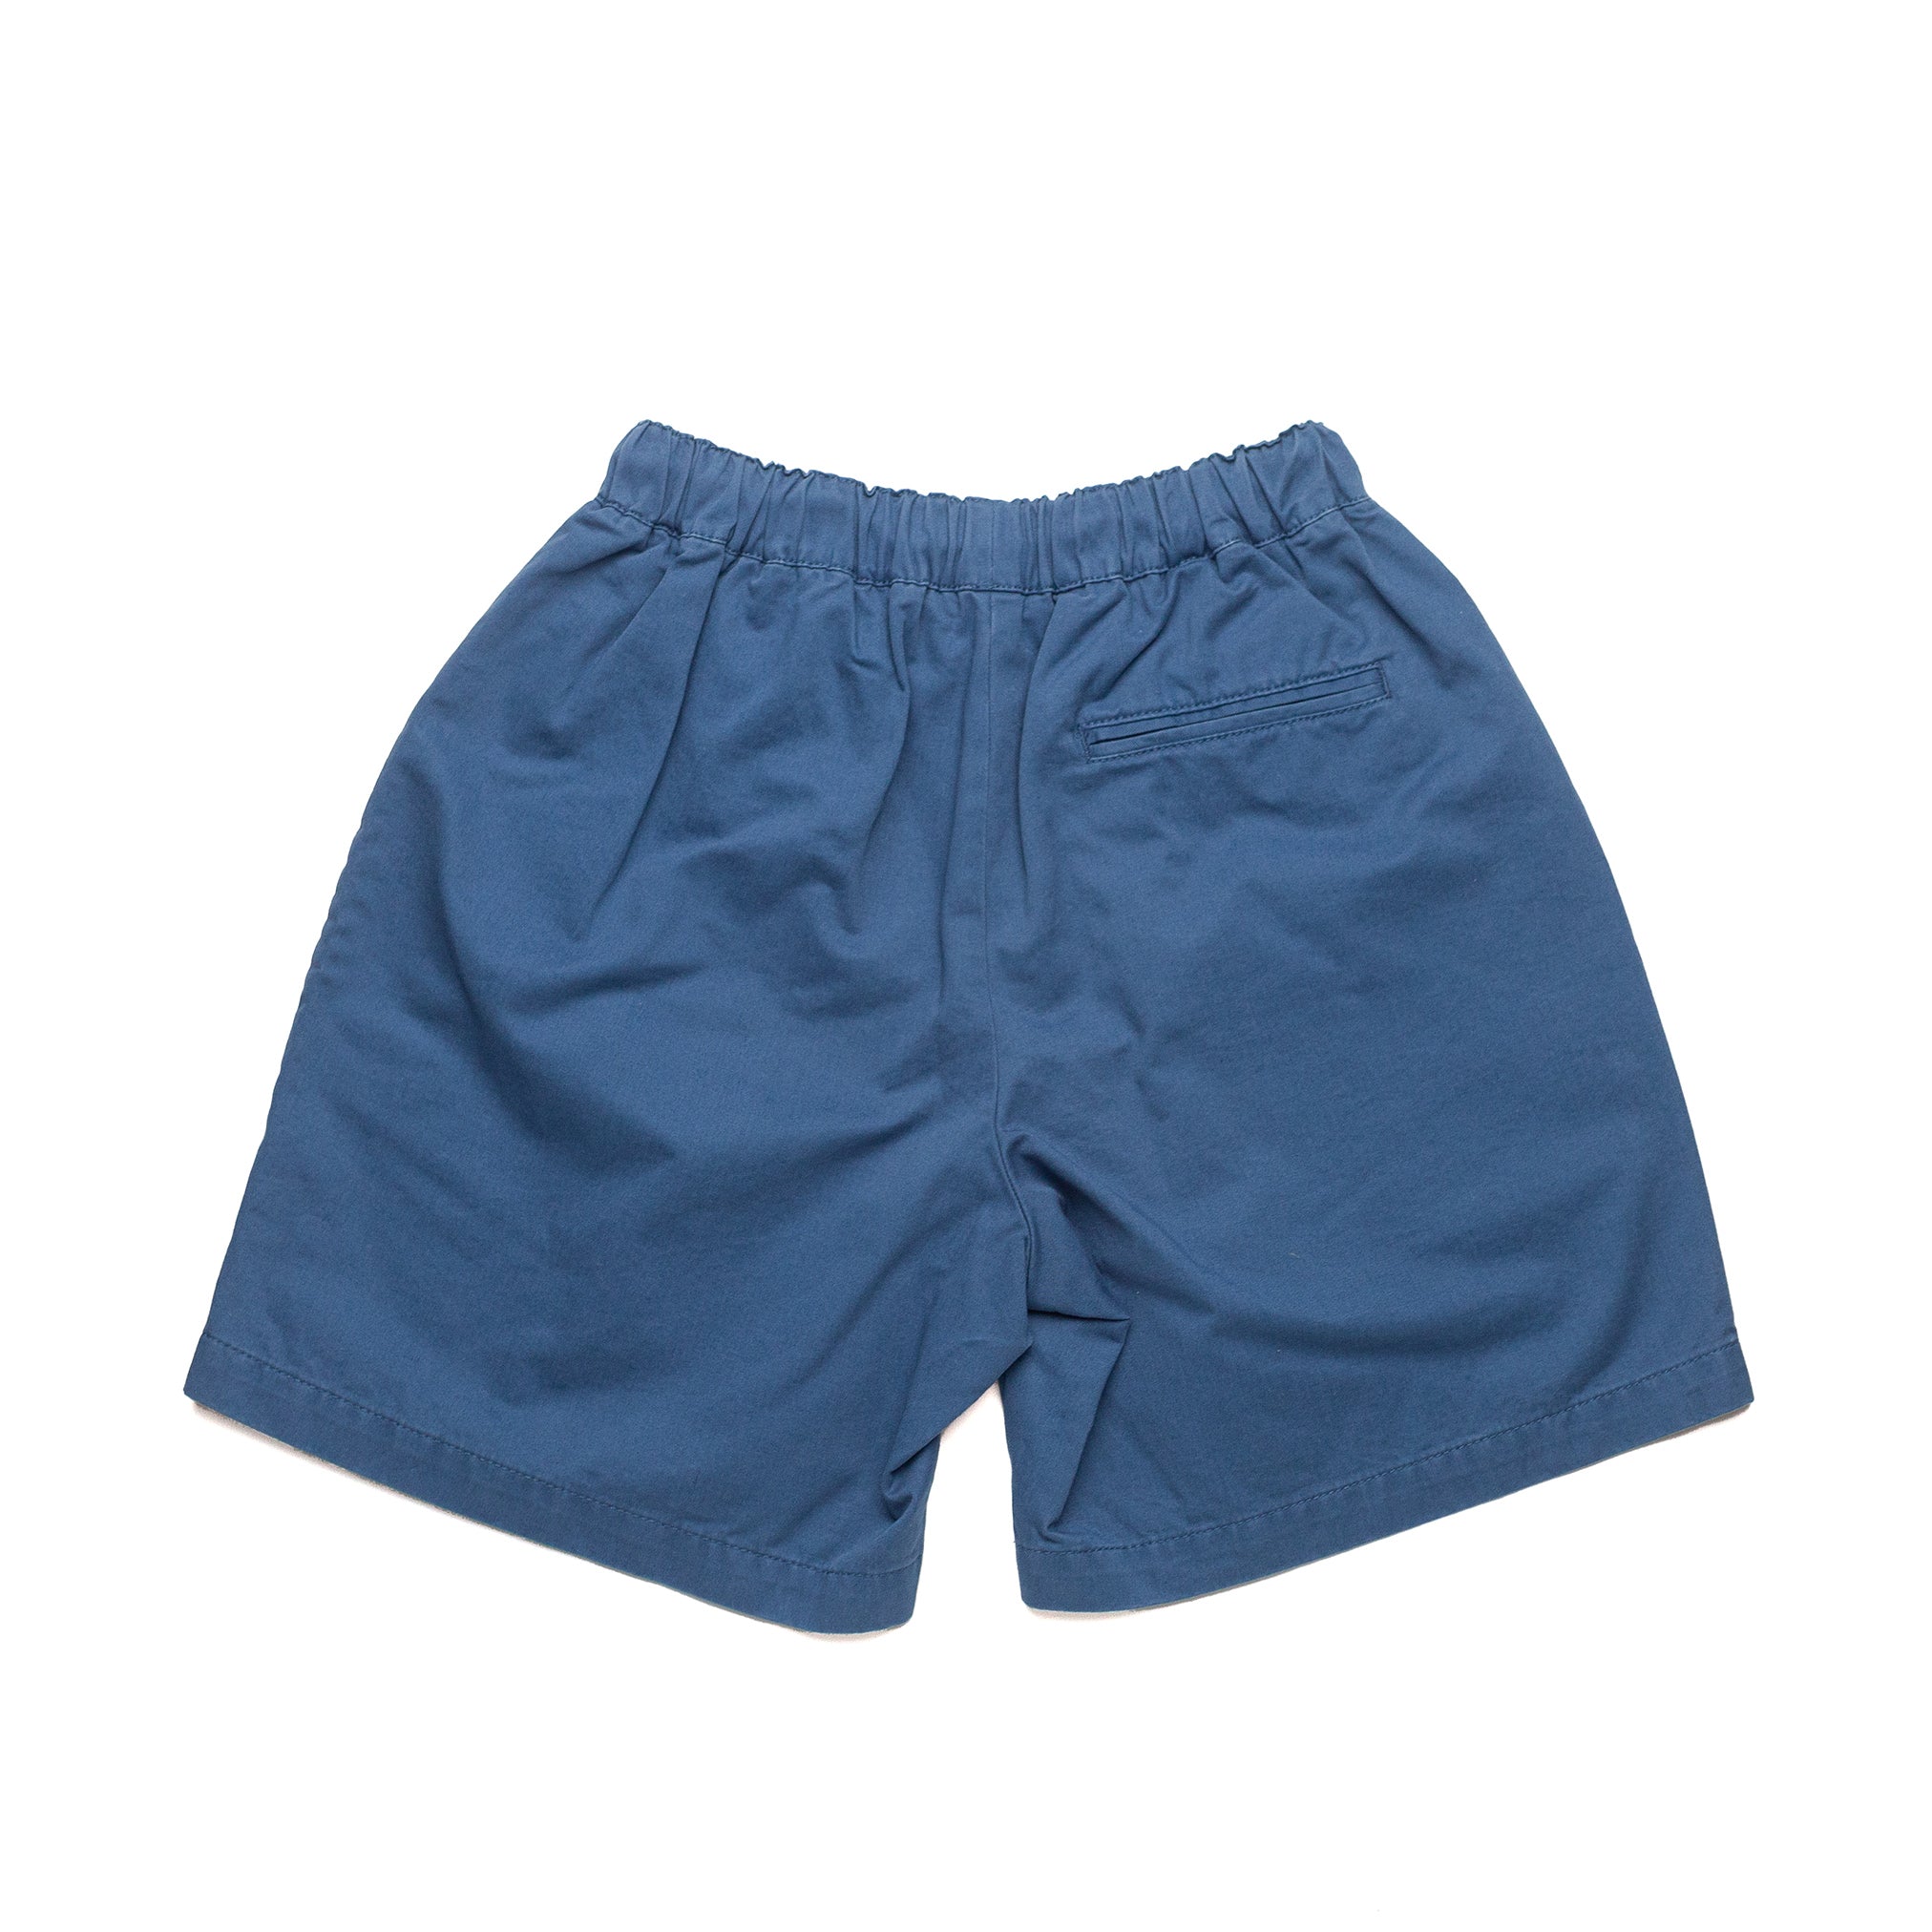 Trampas Shorts in Ensign Blue Foggy Dew - S